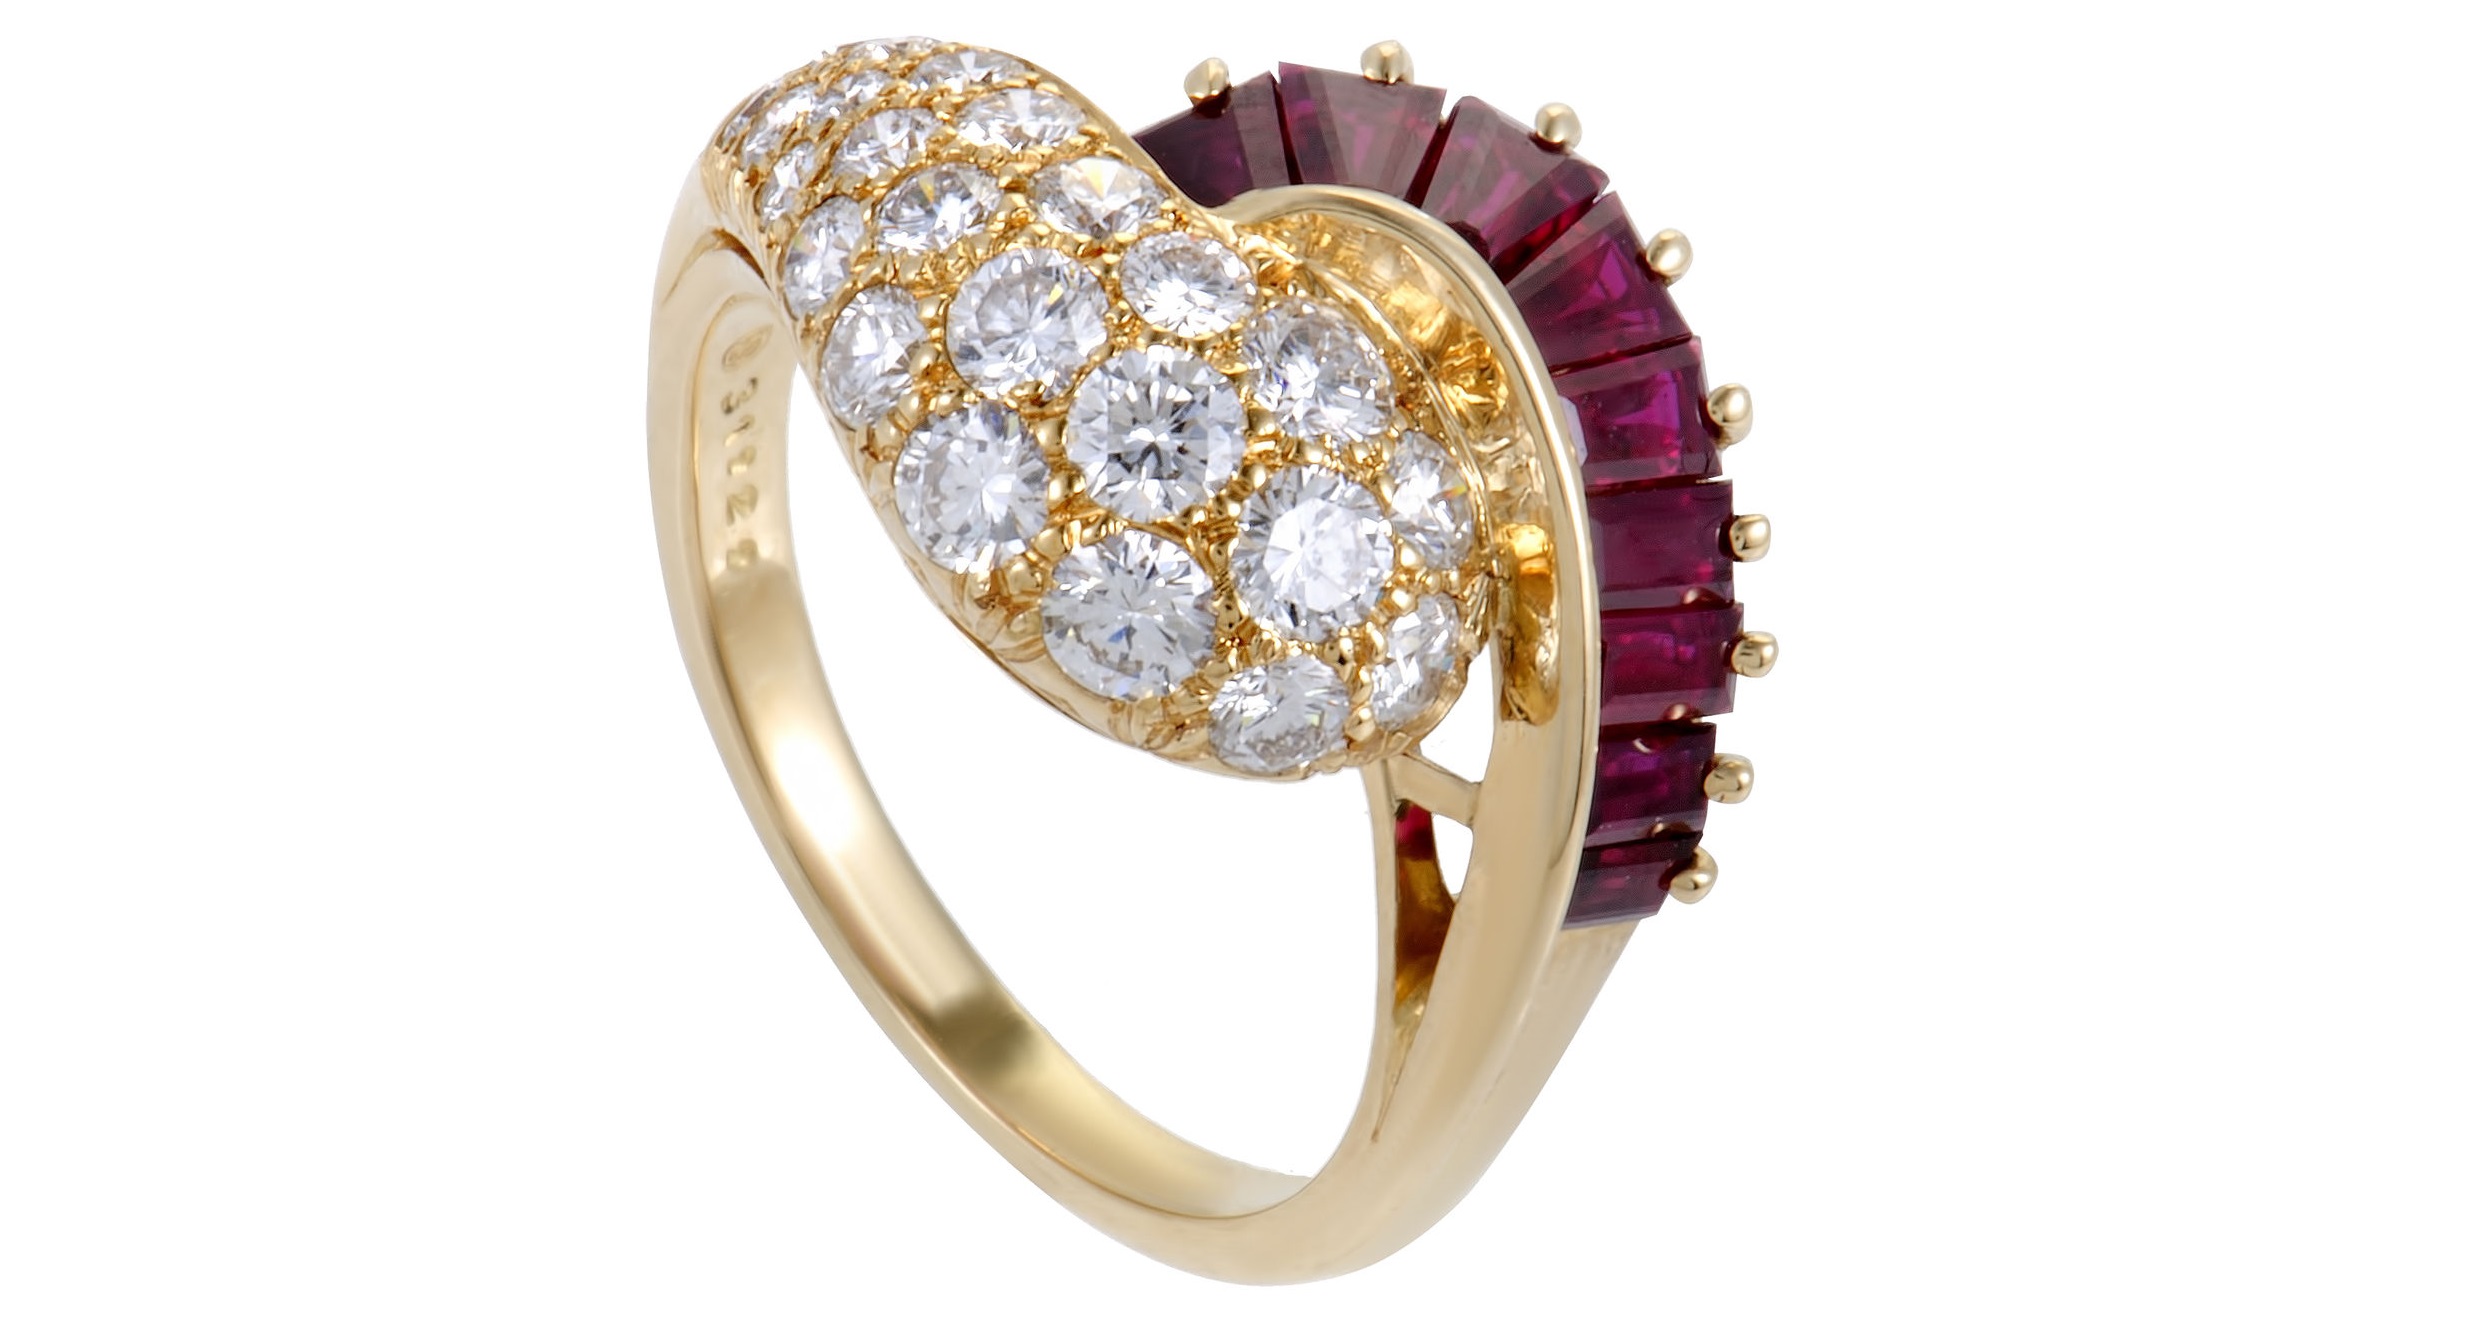  Oscar Heyman 18K Yellow Gold Diamond and Ruby Ring